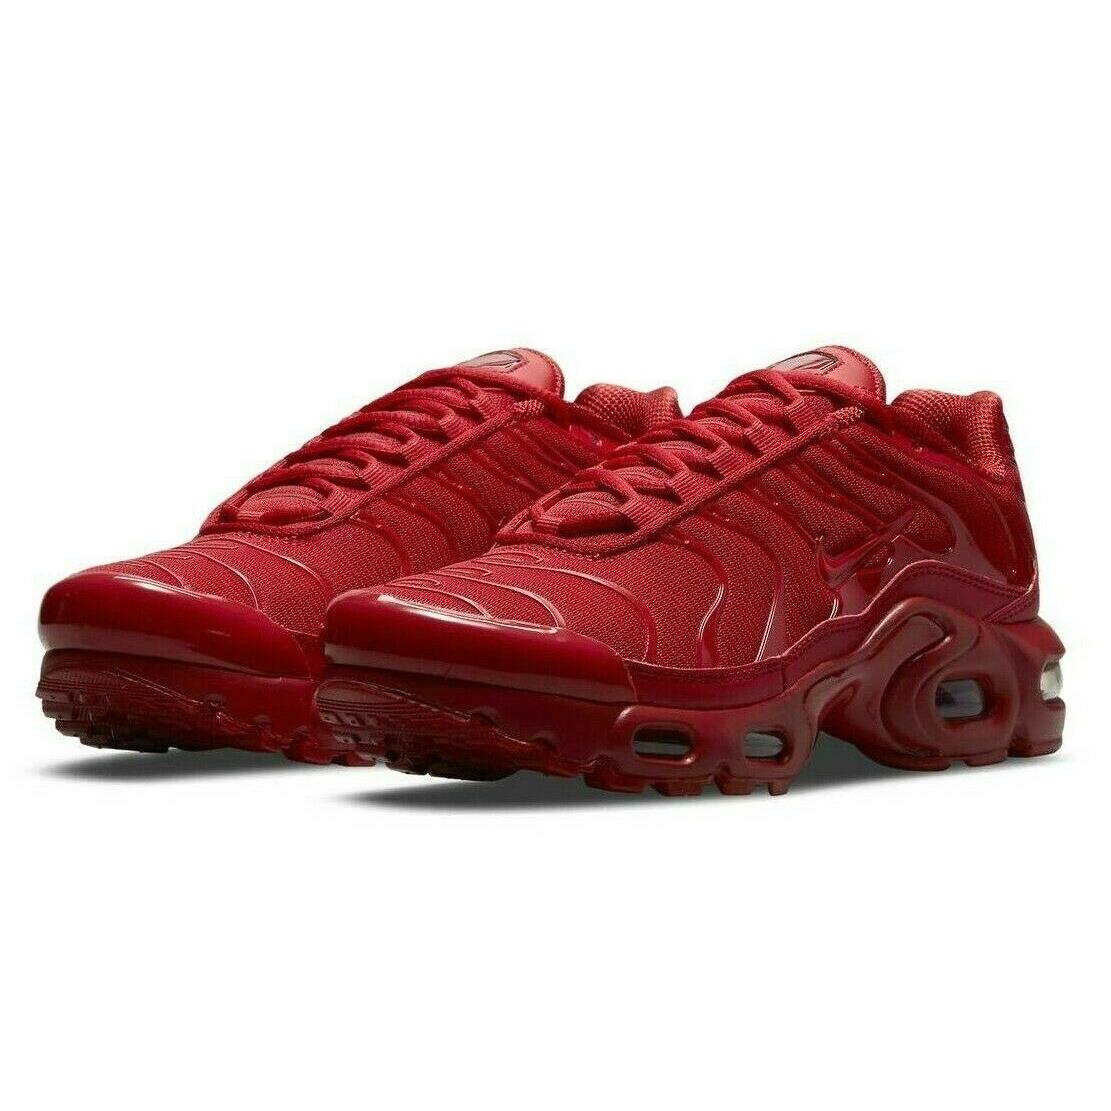 Nike Air Max Plus GS Womens Size 5.5 Sneaker Shoes DM8877 600 Triple Red sz 4Y